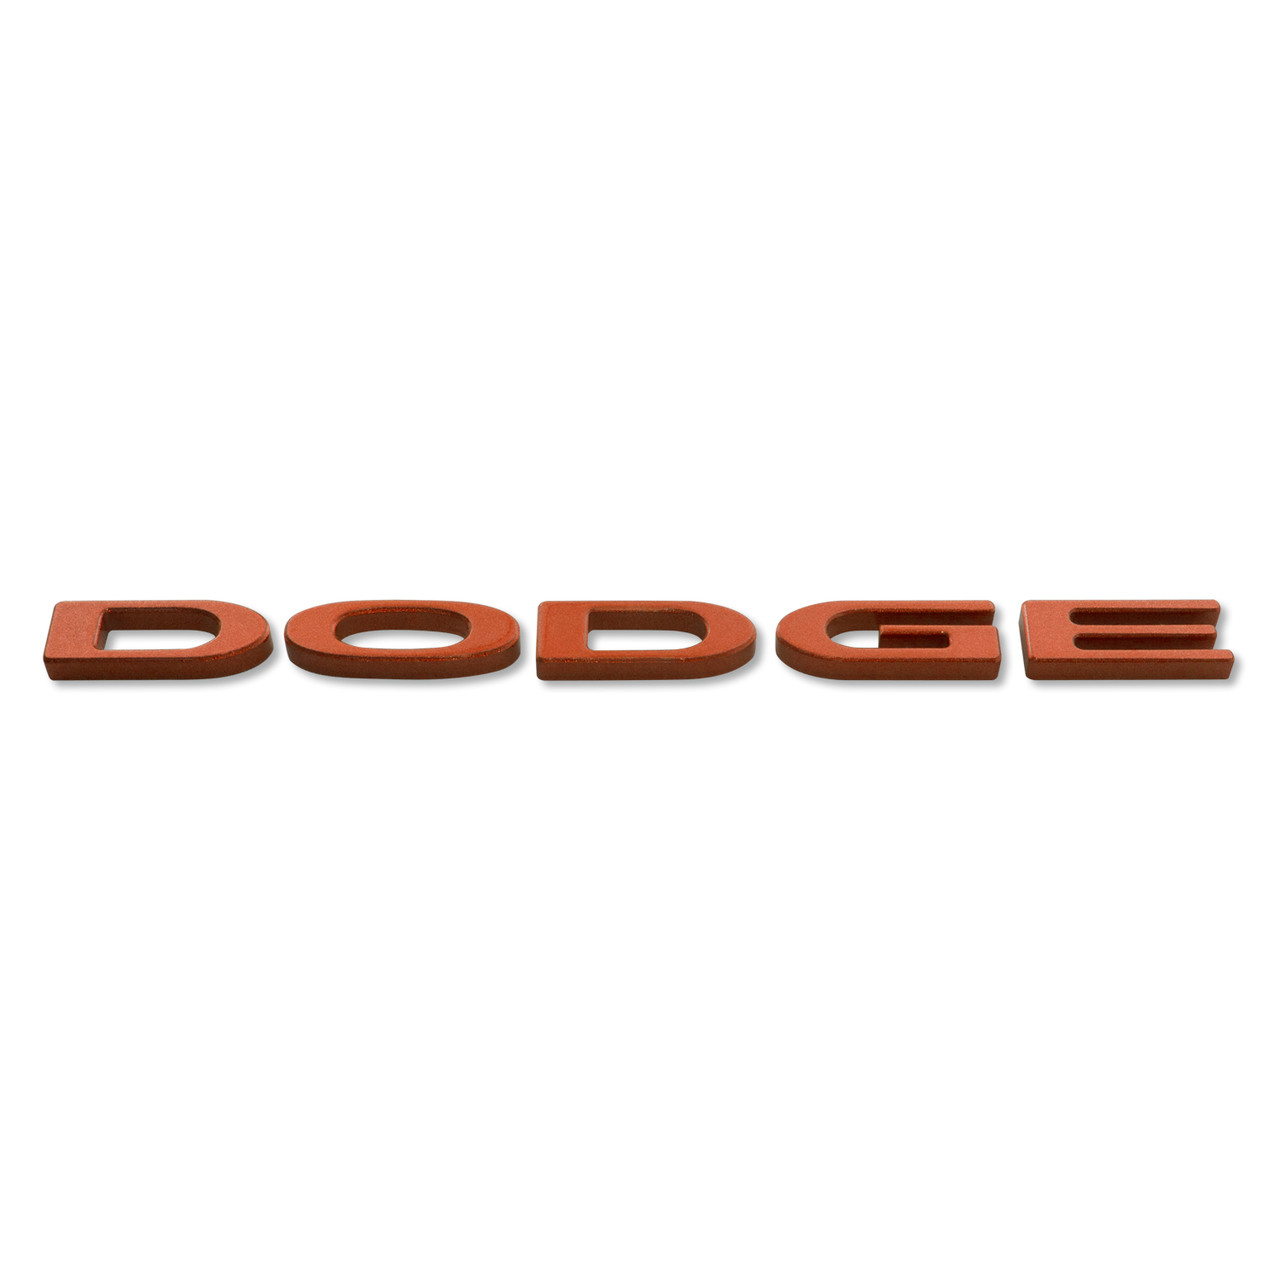 Charger/Durango "Dodge" Exterior Badge - Go Mango